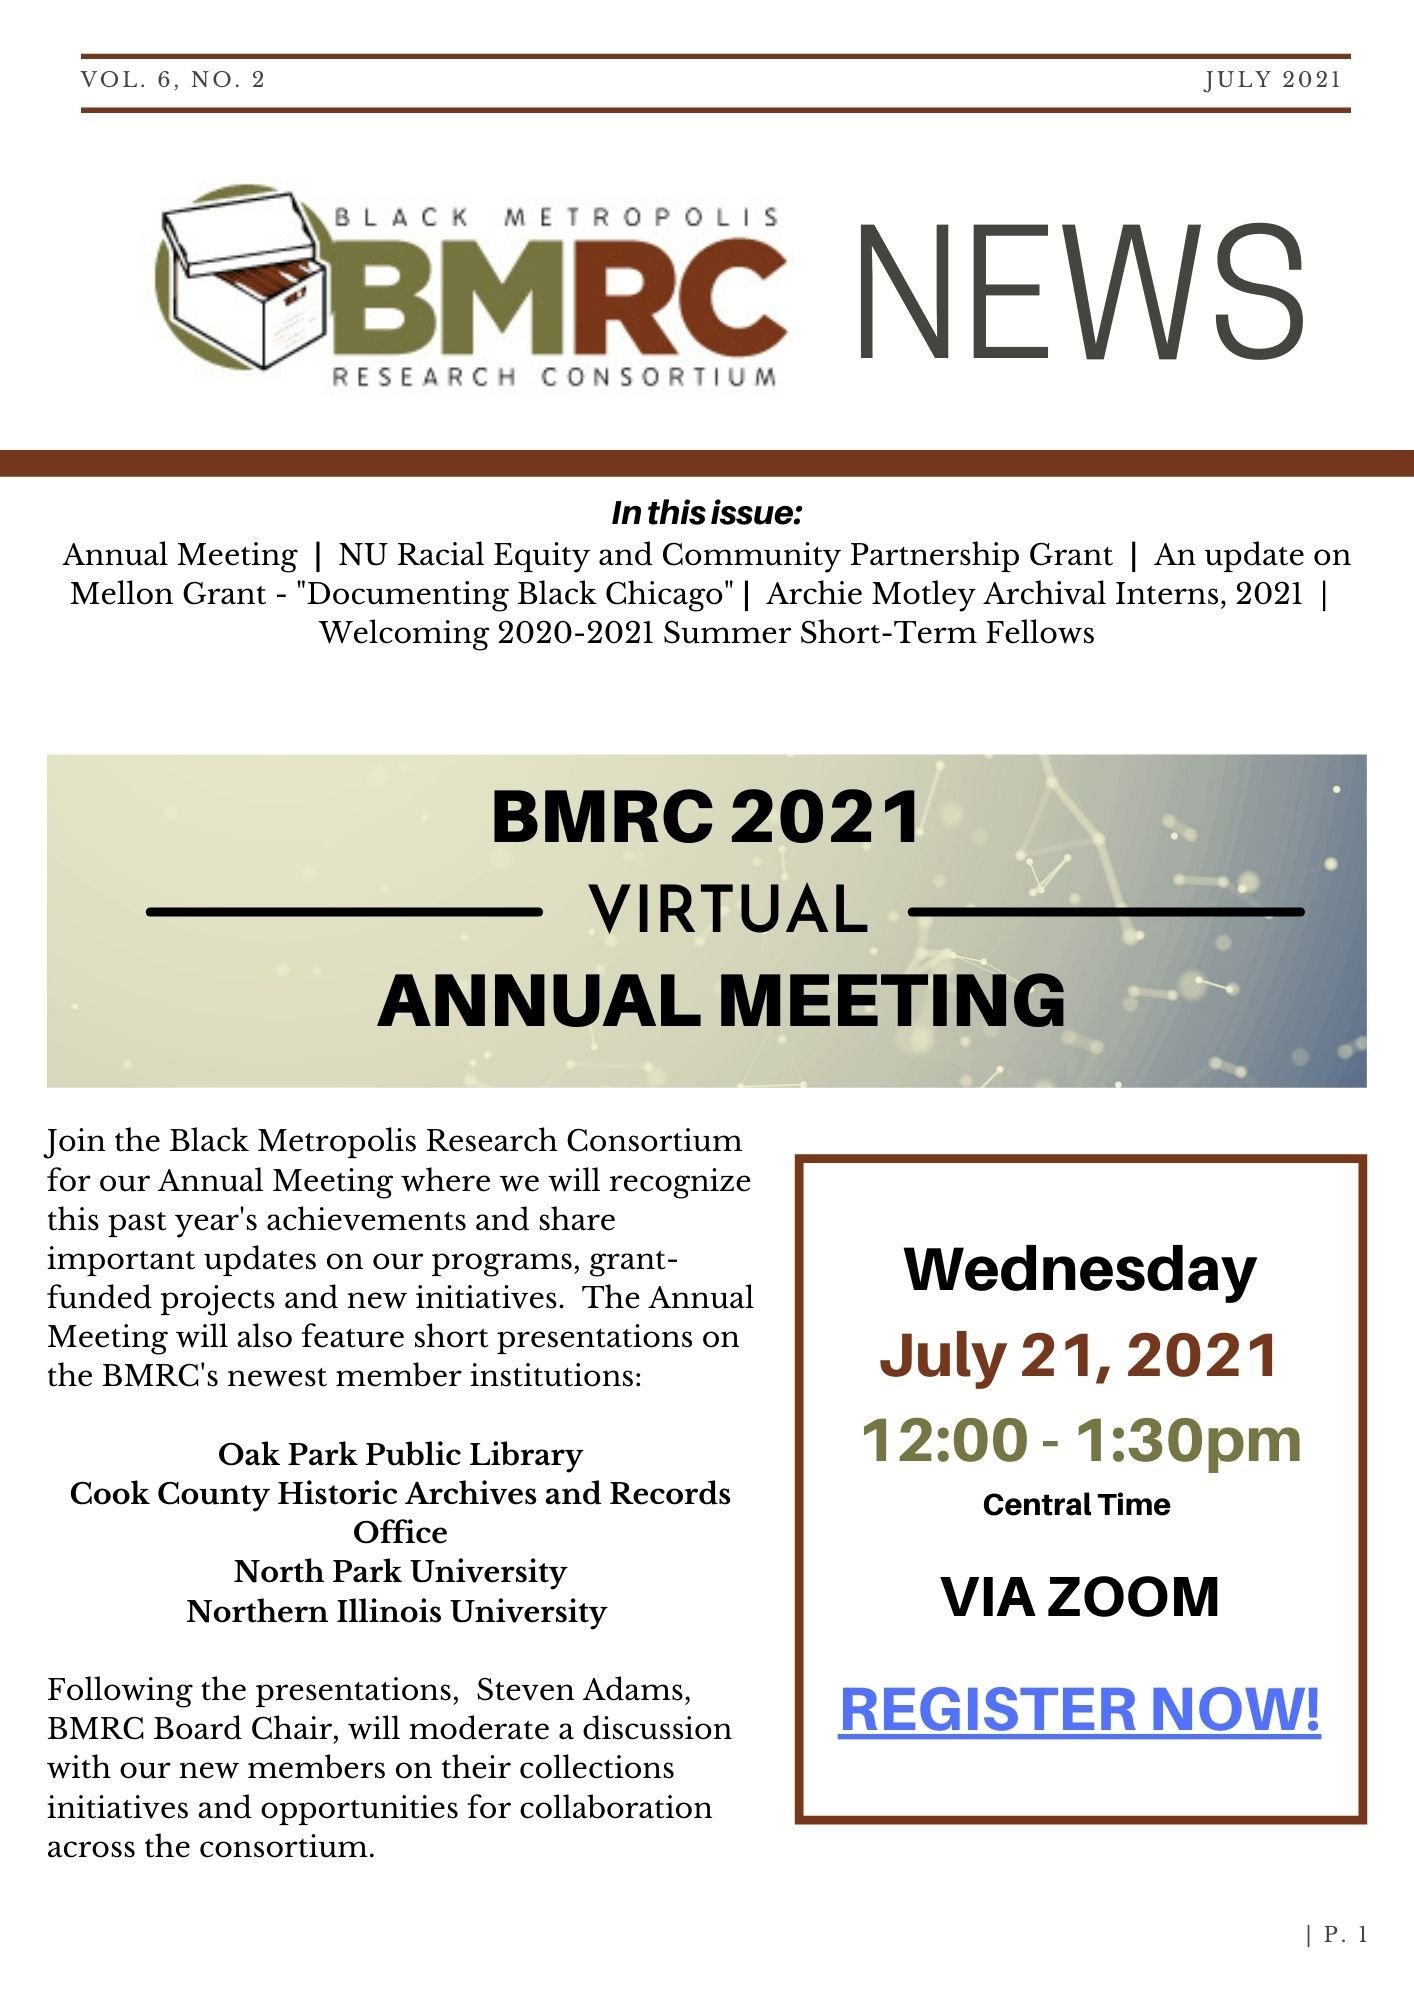 BMRC News July 2021